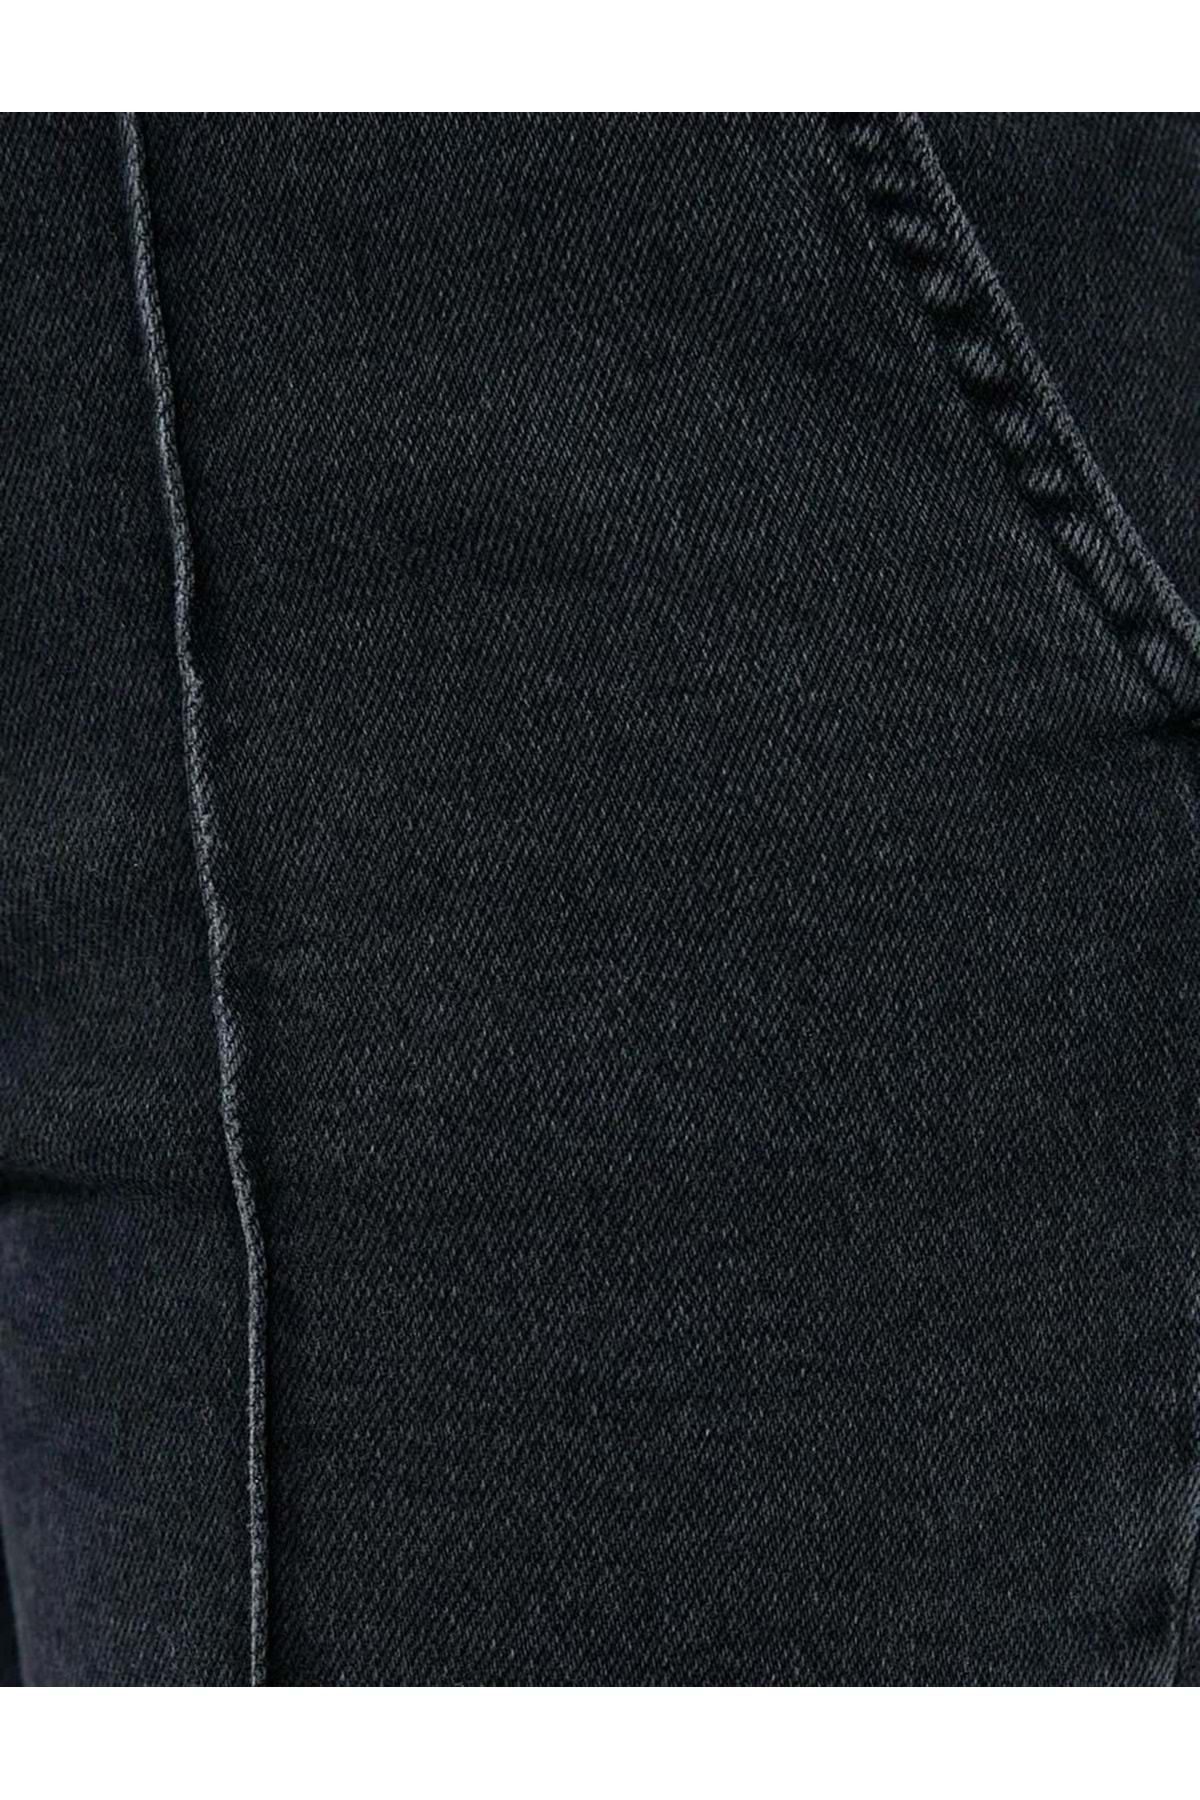 Koton شلوار جین اسپانیایی آجدار باریک و کمر معمولی - Victoria Jean 4WAL40173MD مشکی